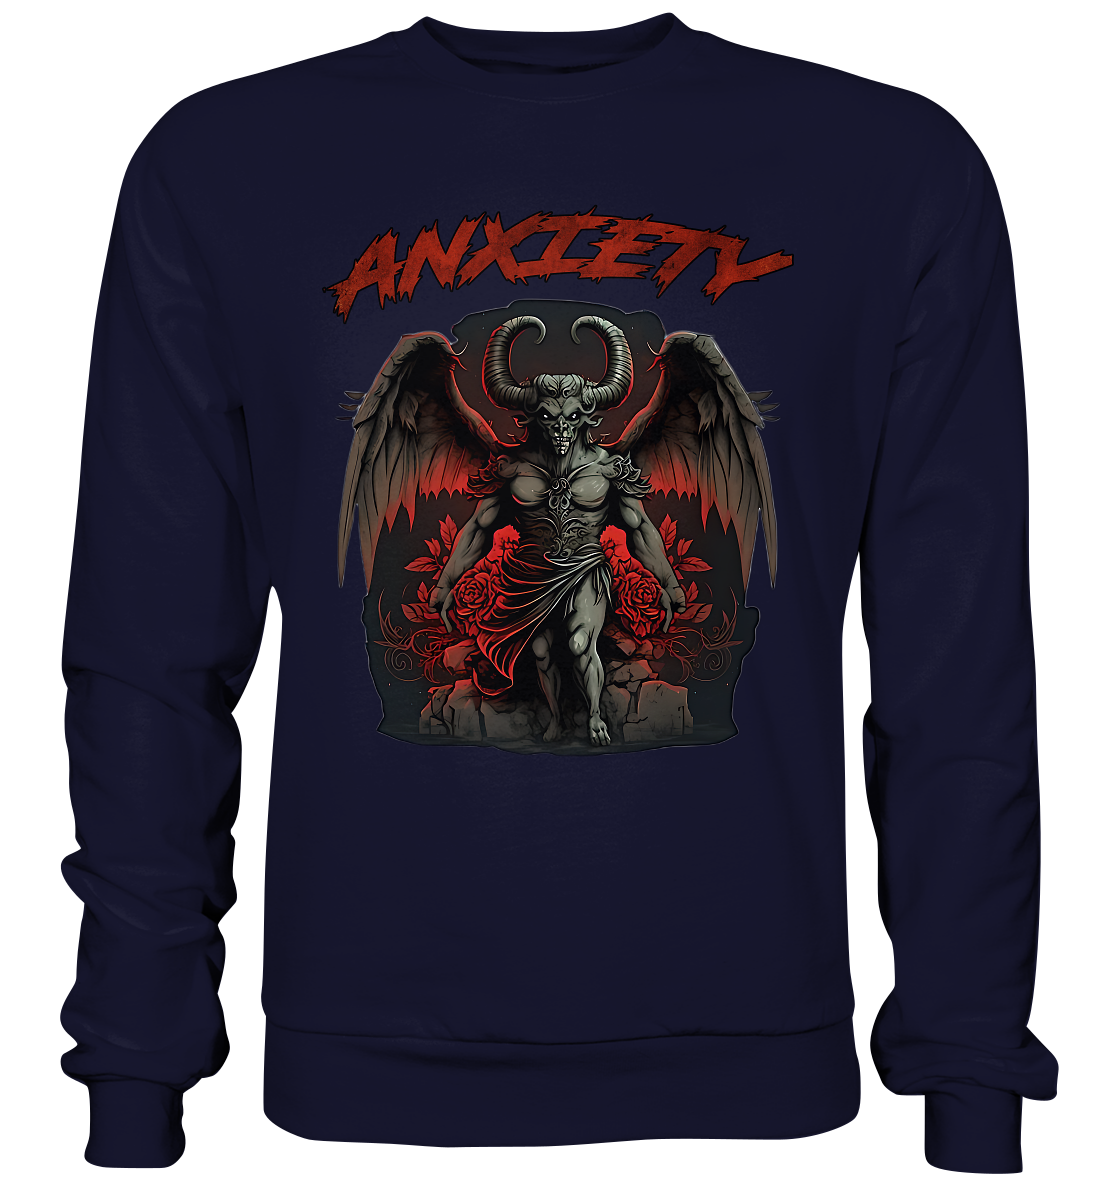 ANXIETY – Sweatshirt